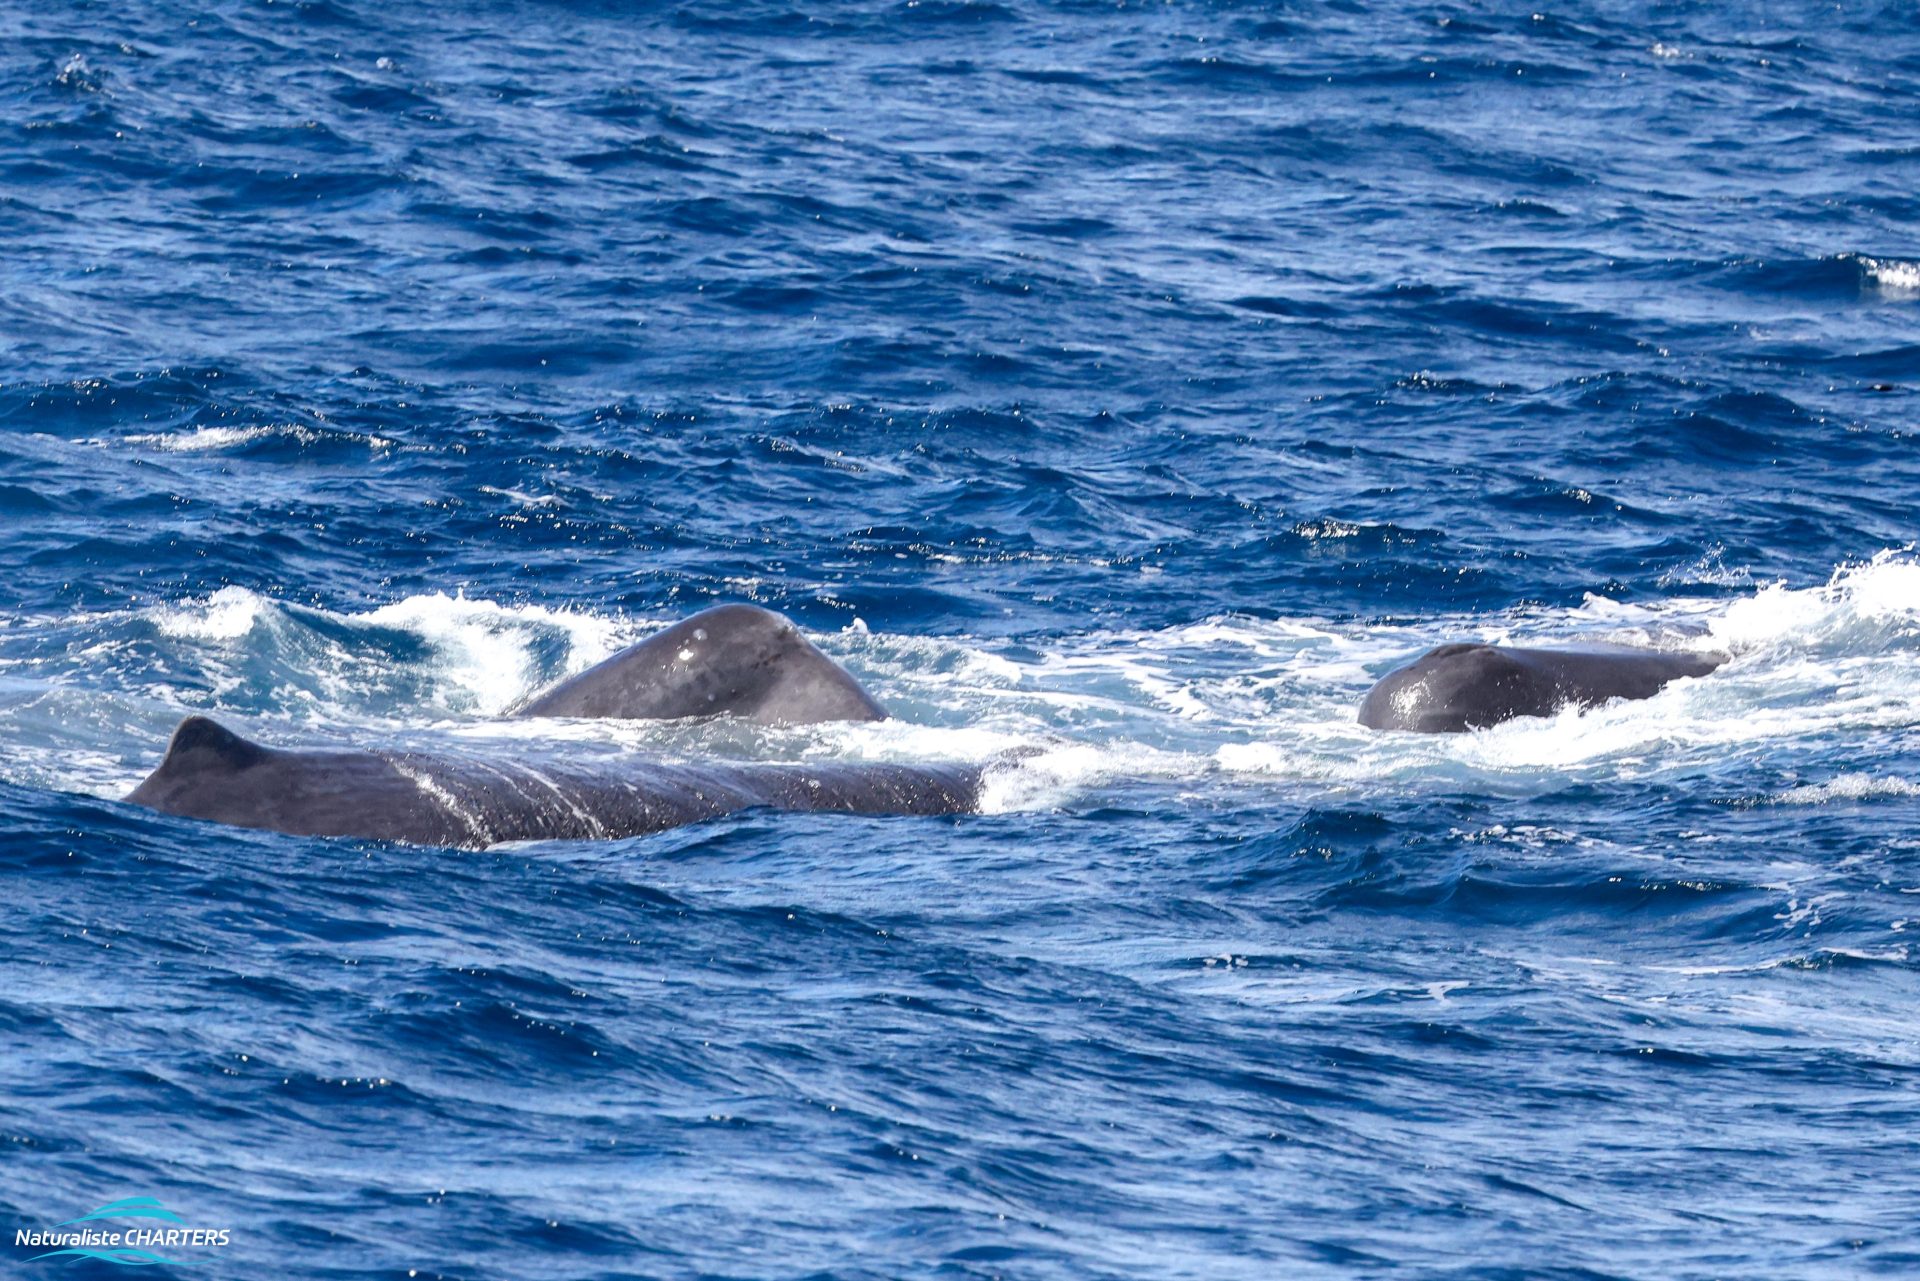 We encounter Sperm Whales and a calf